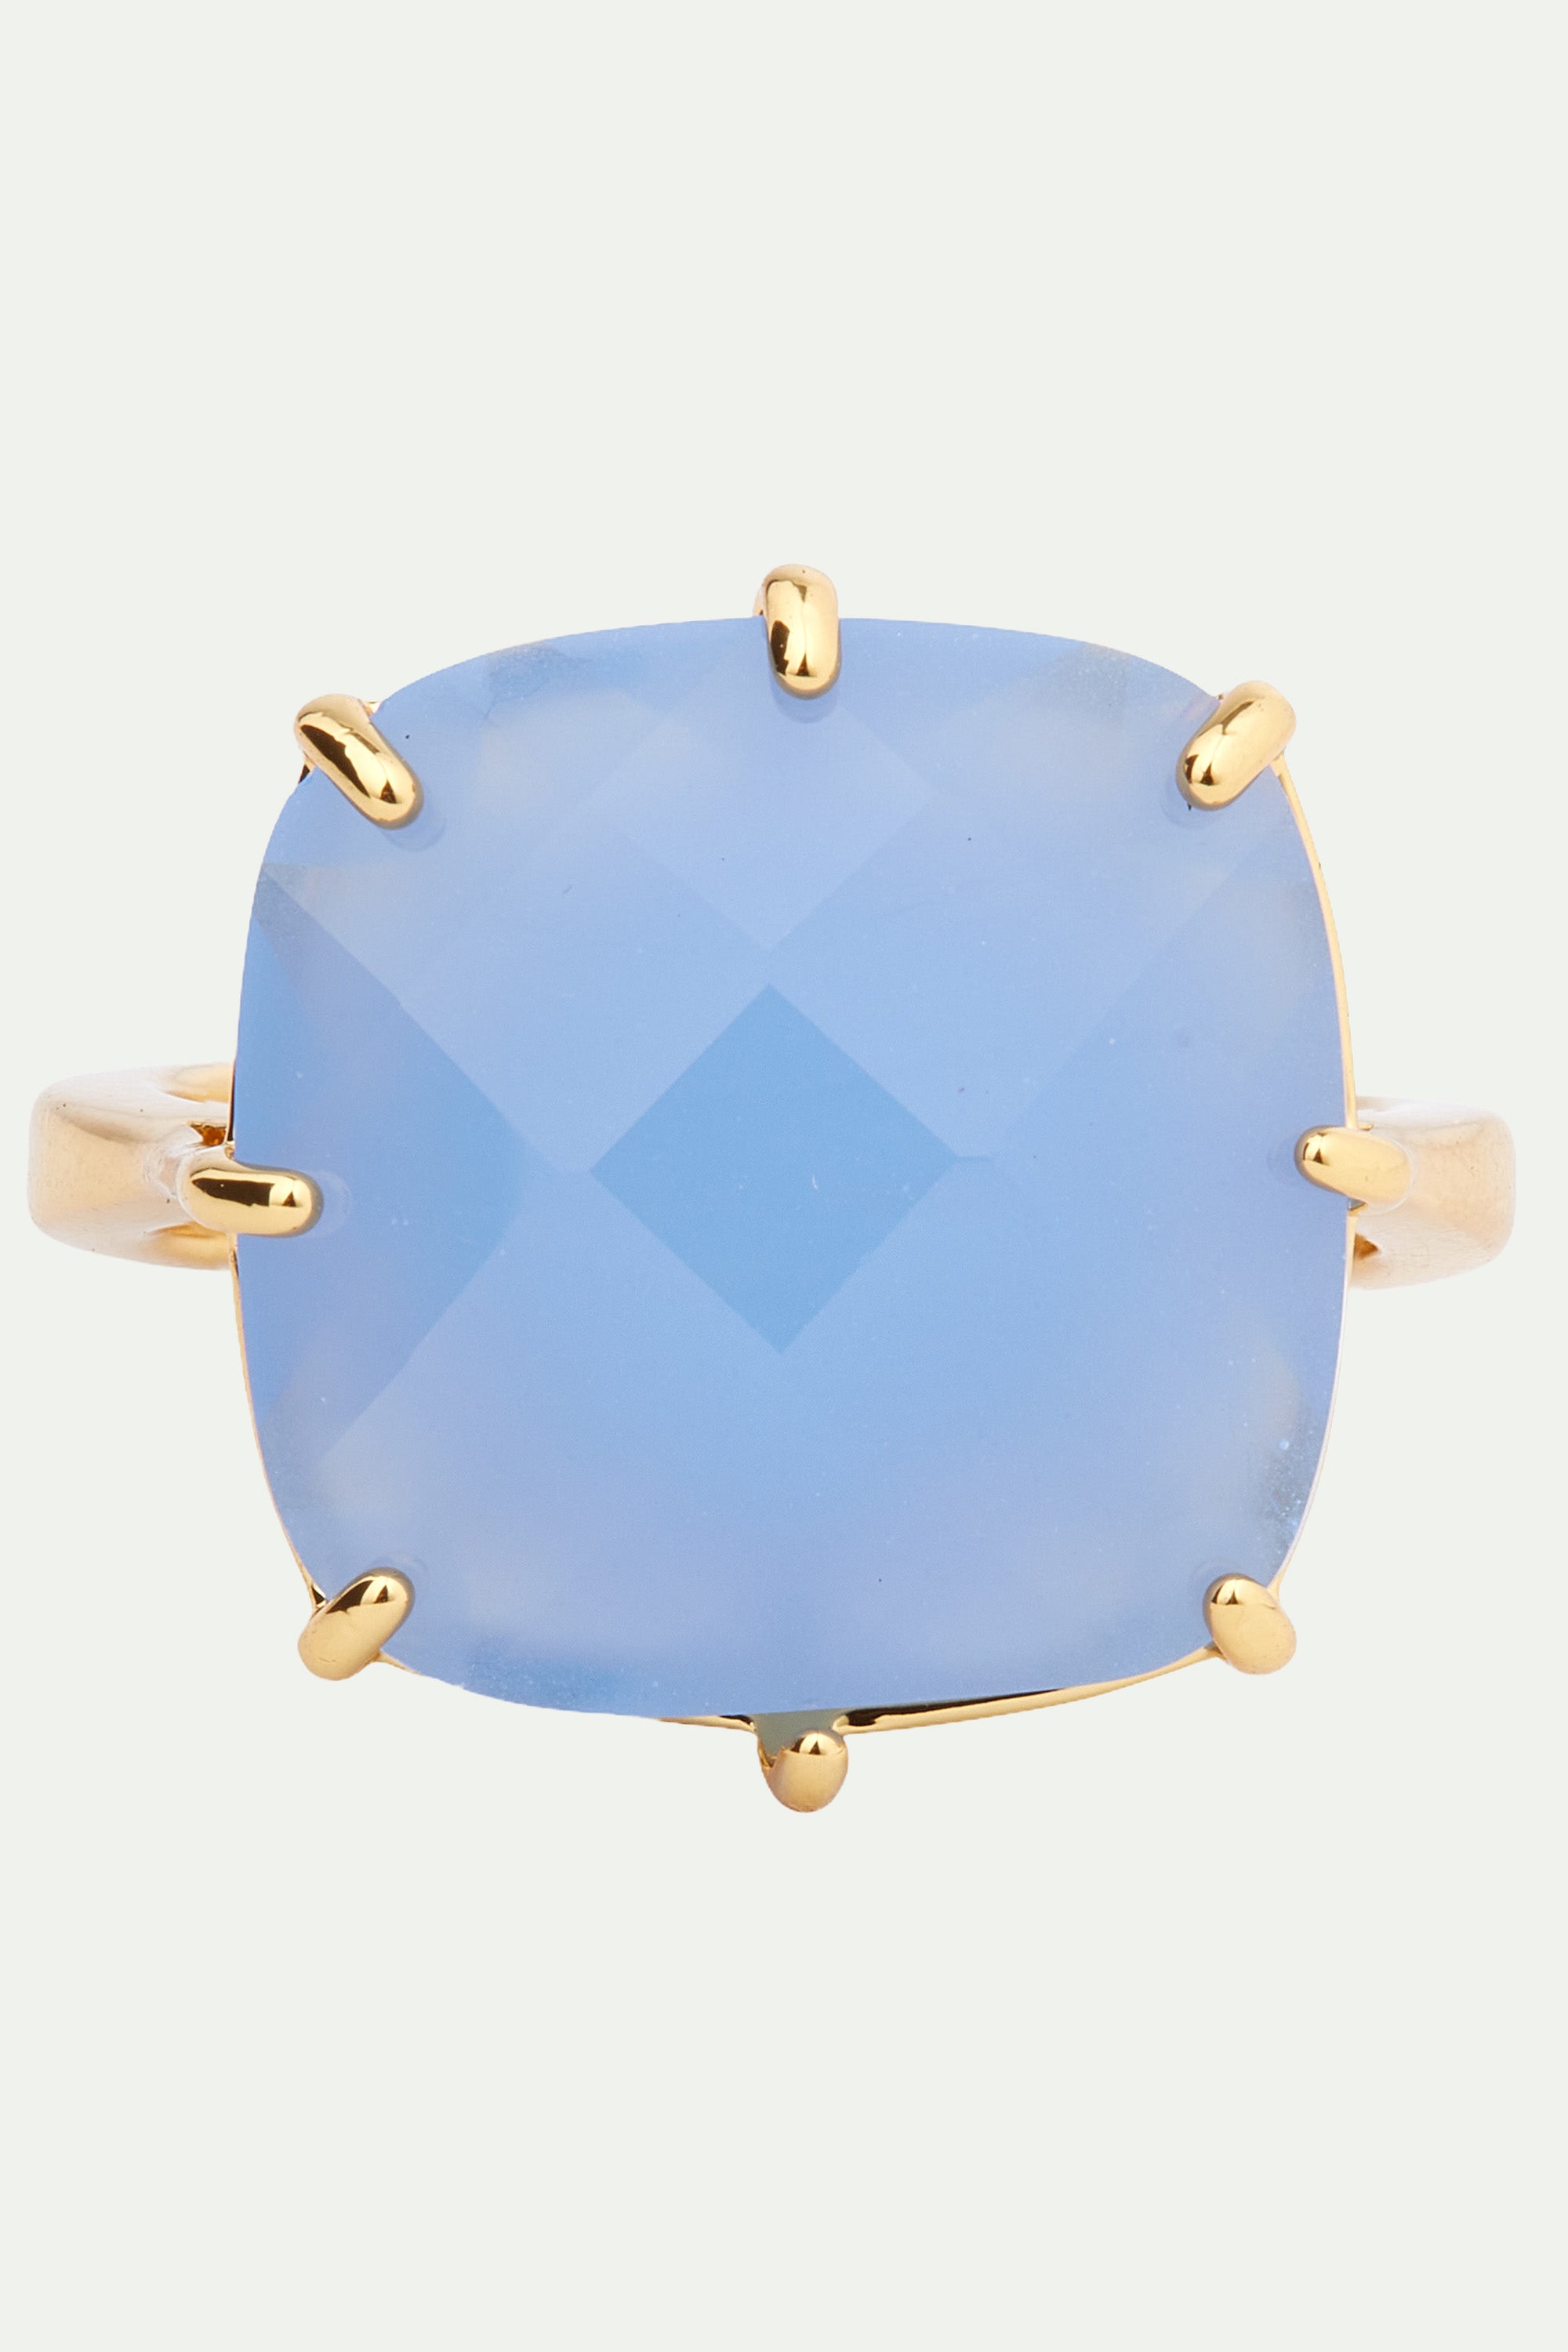 Sky blue Diamantine square solitaire ring